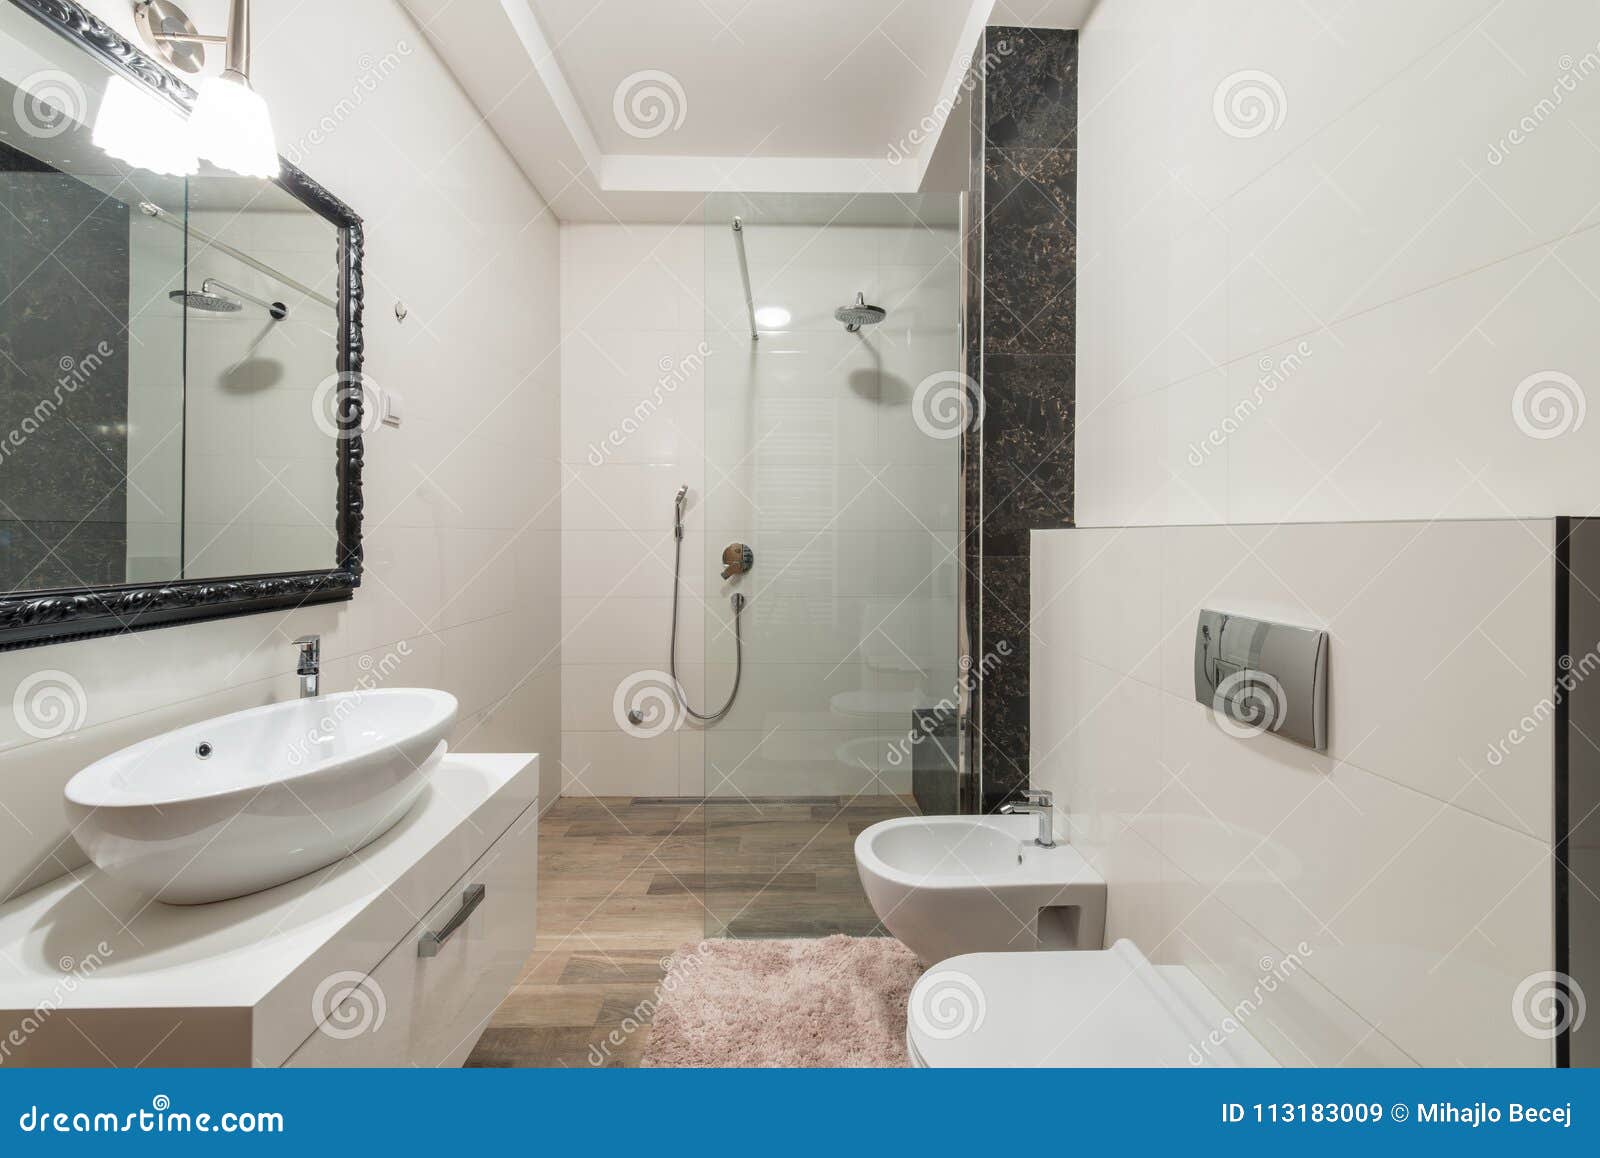 Modern Bathroom Interior with Shower Cabin in Luxury Villa Stock Image ...